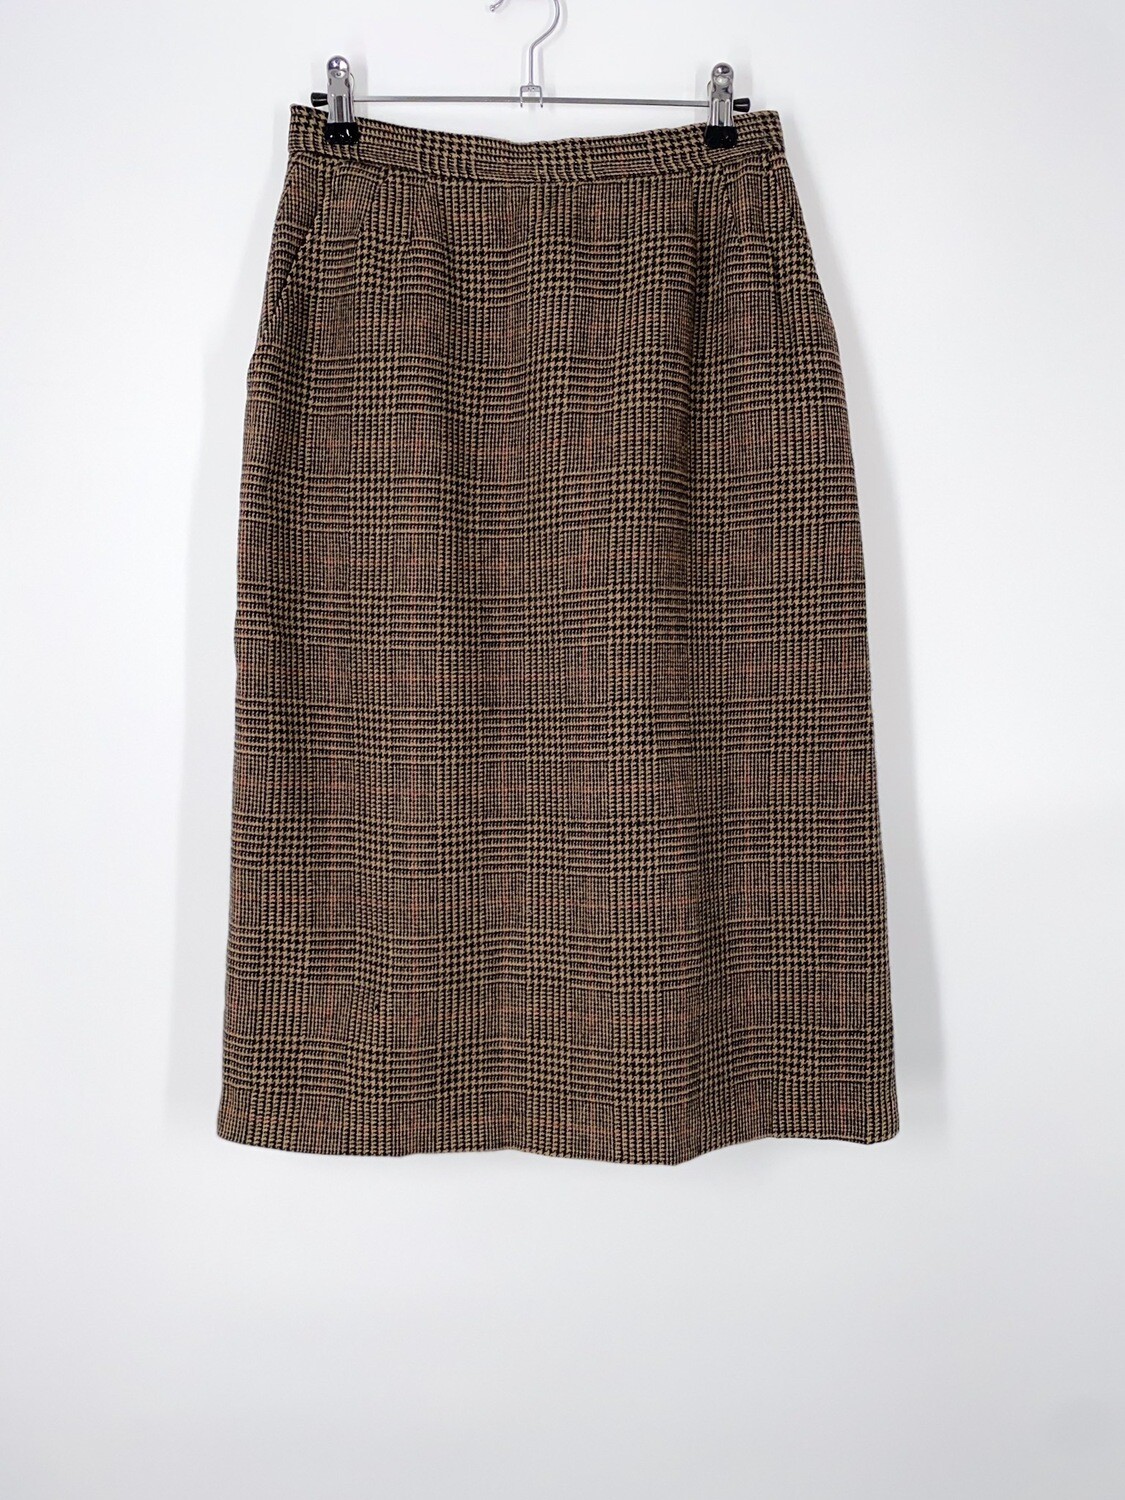 Evan-Picone Wool Skirt Size M